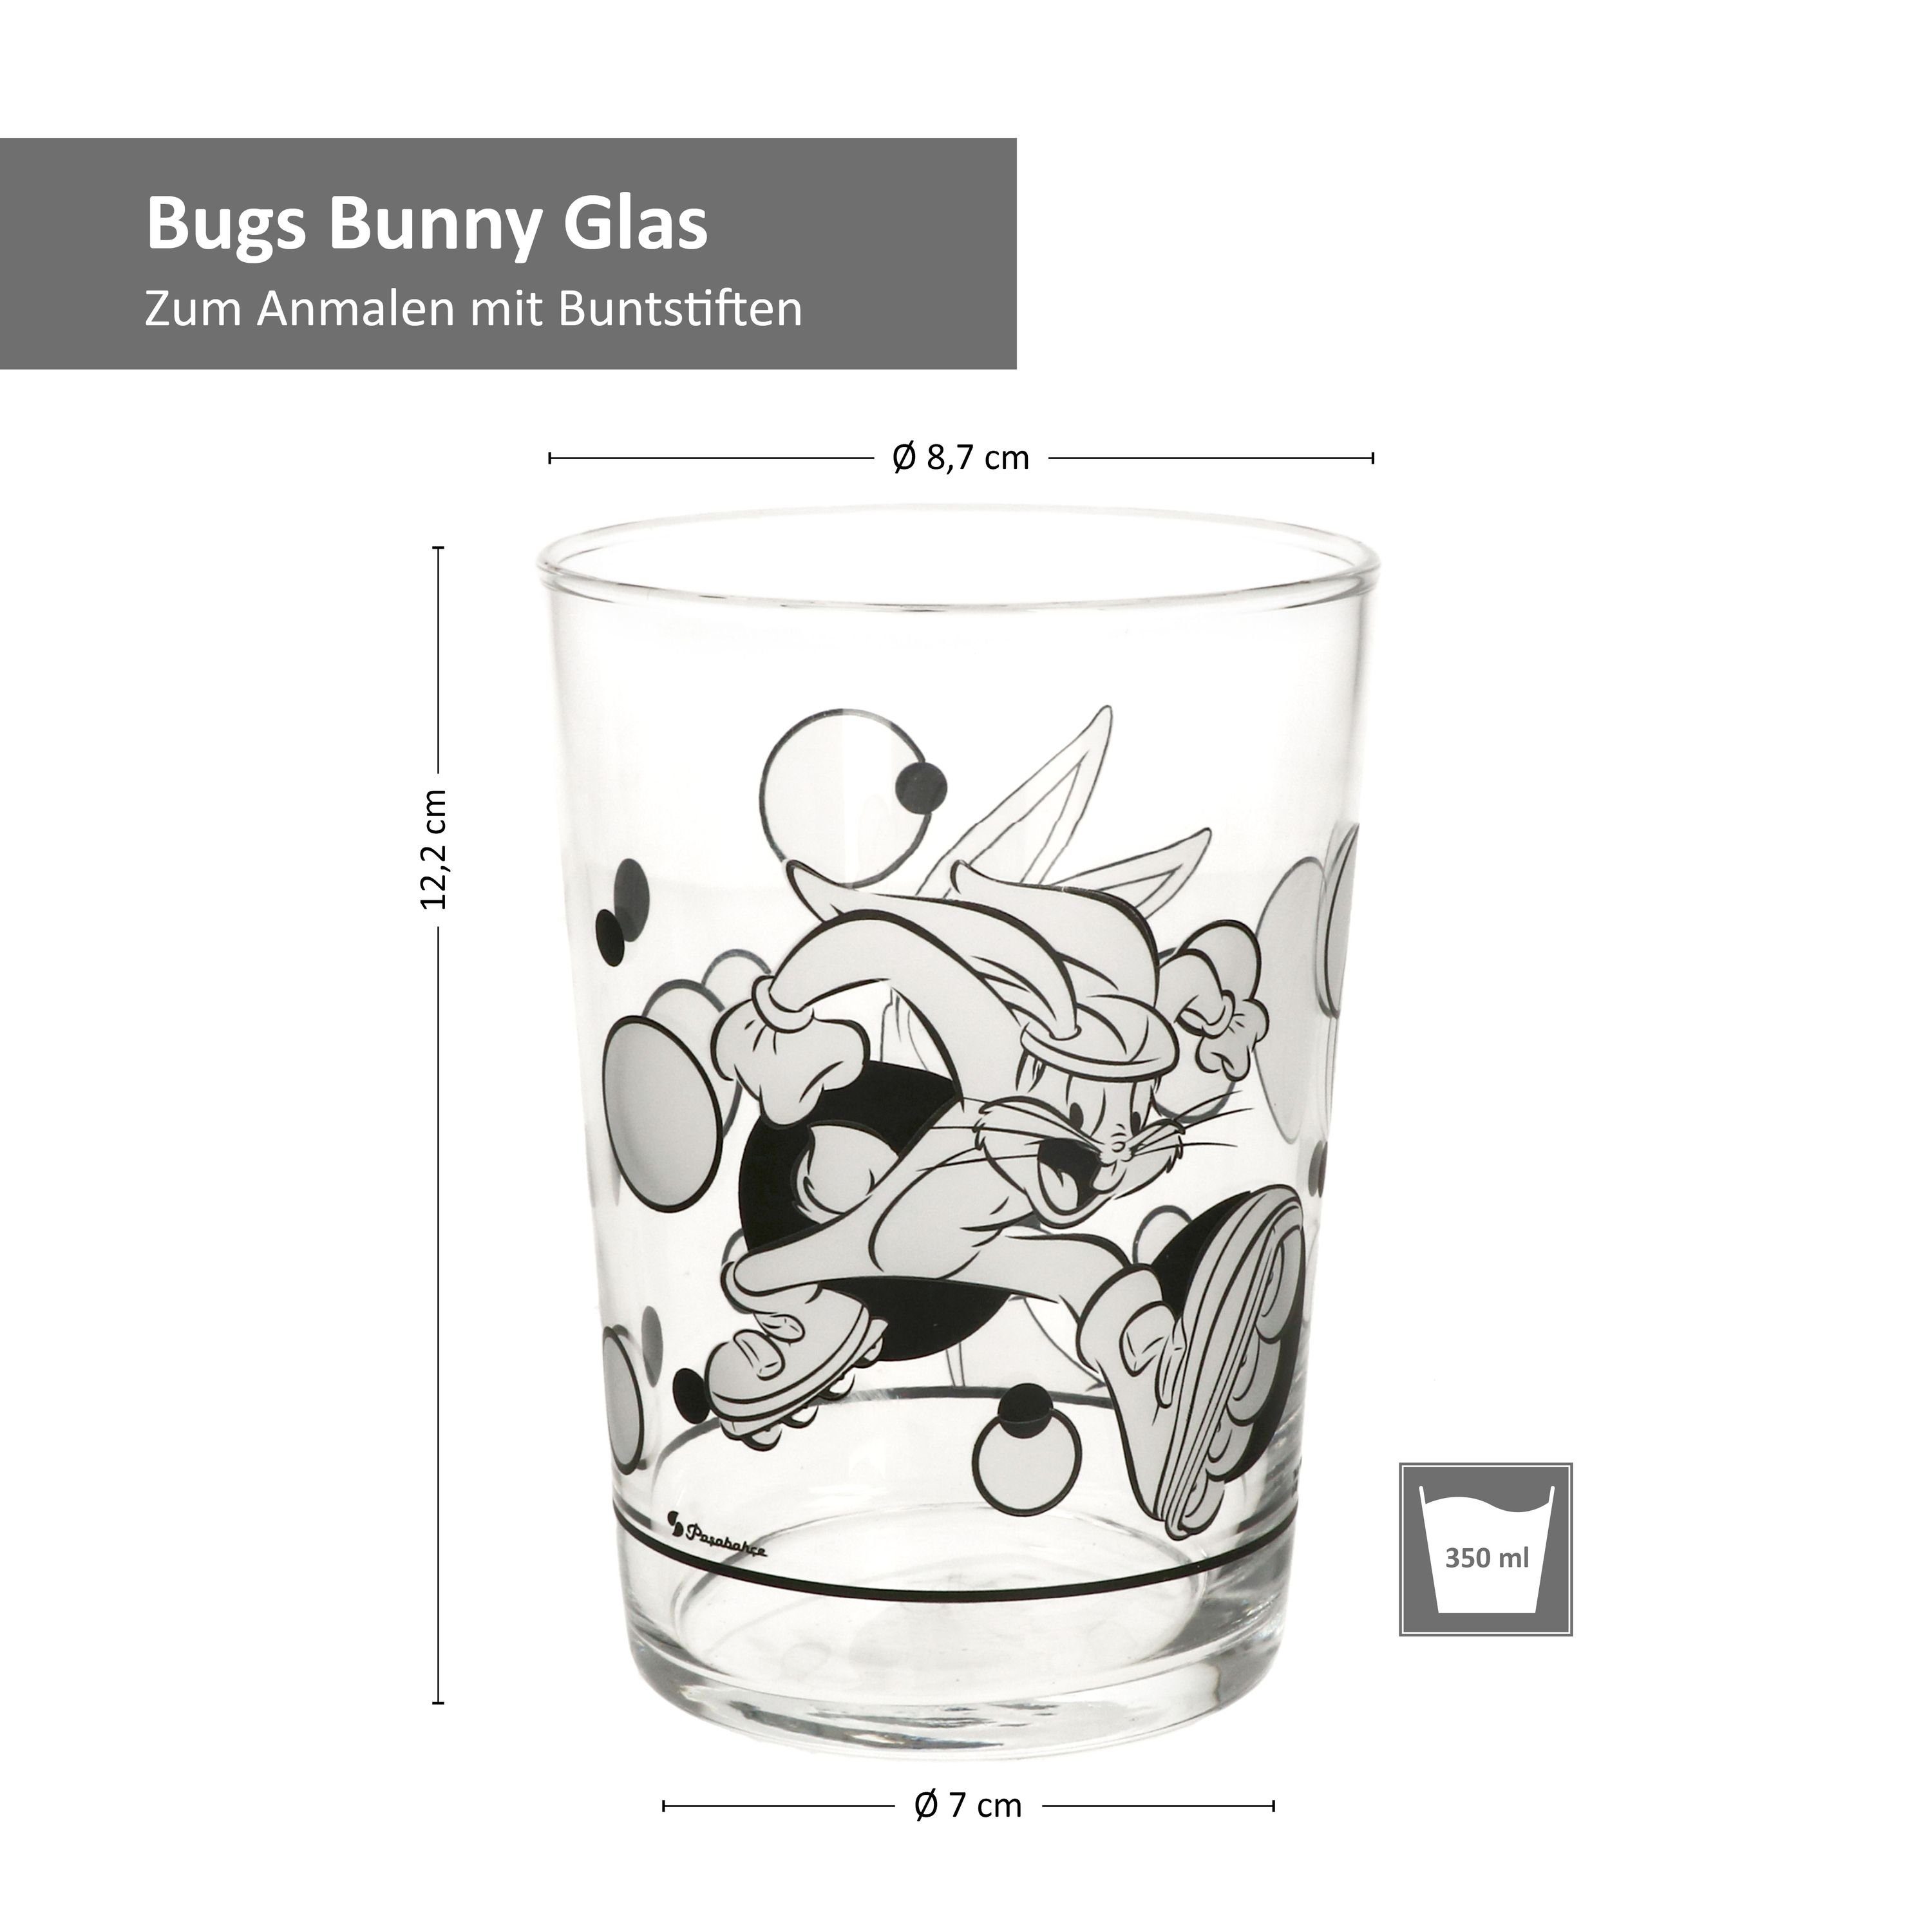 0168440, Bugs - Bunny Glas Set 350ml MamboCat Anmalen Glas zum 4er Glas